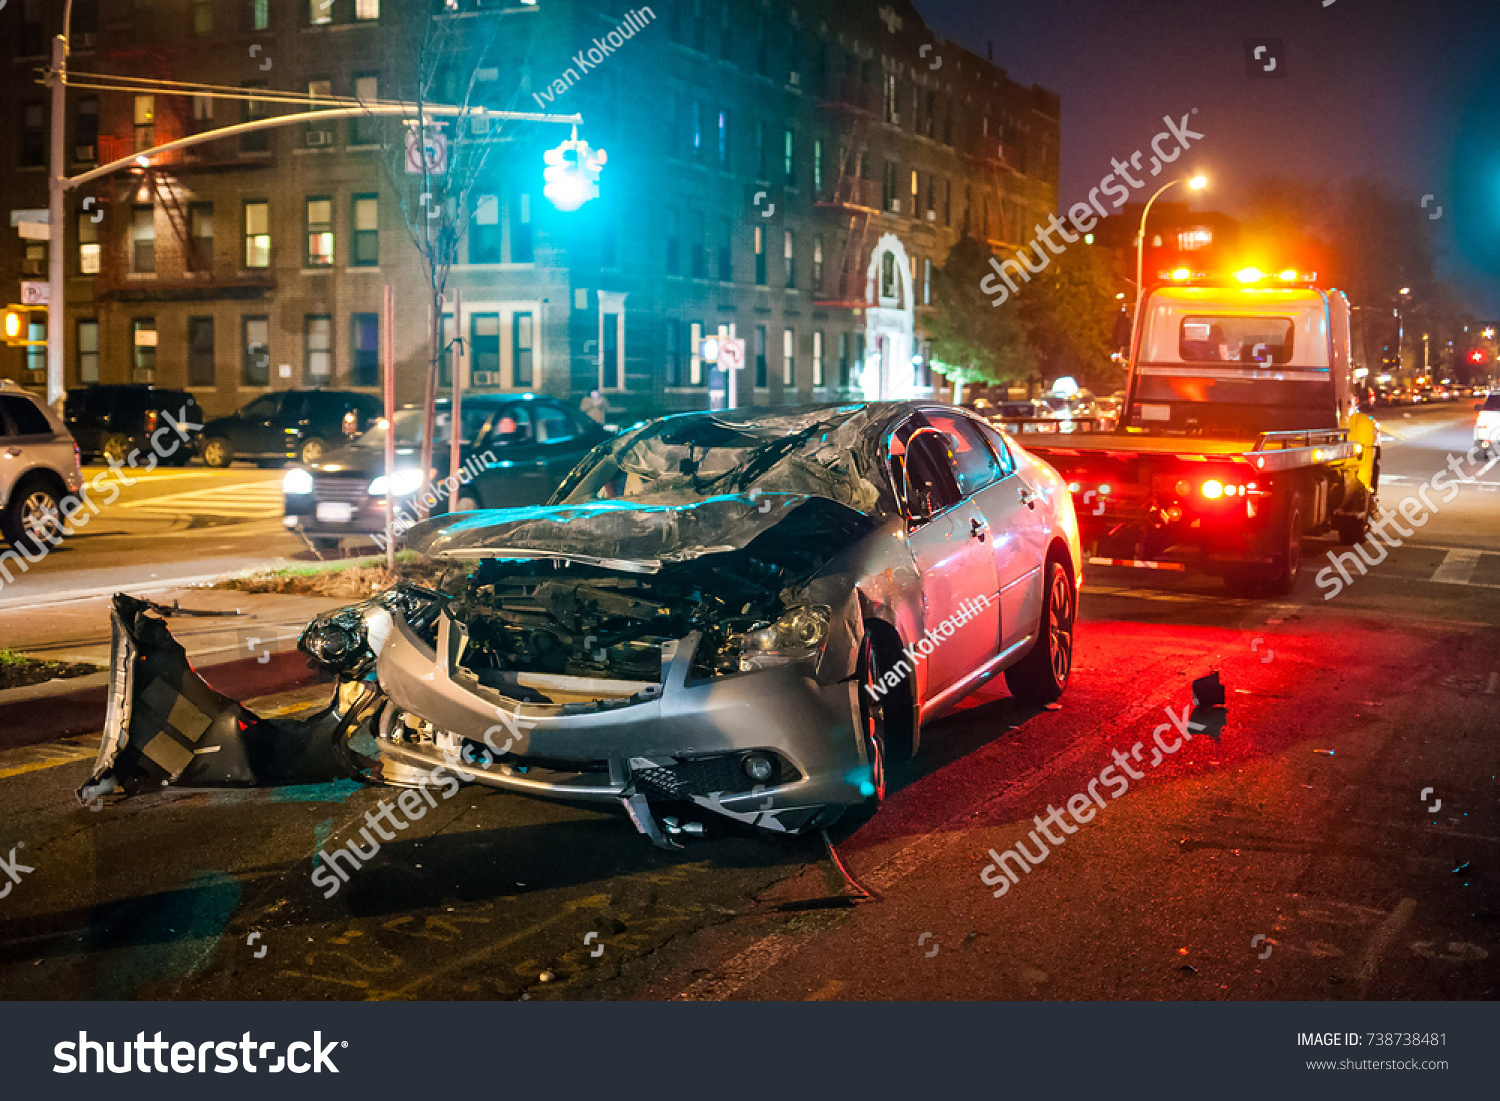 Car crash night city rescue emergency service #738738481